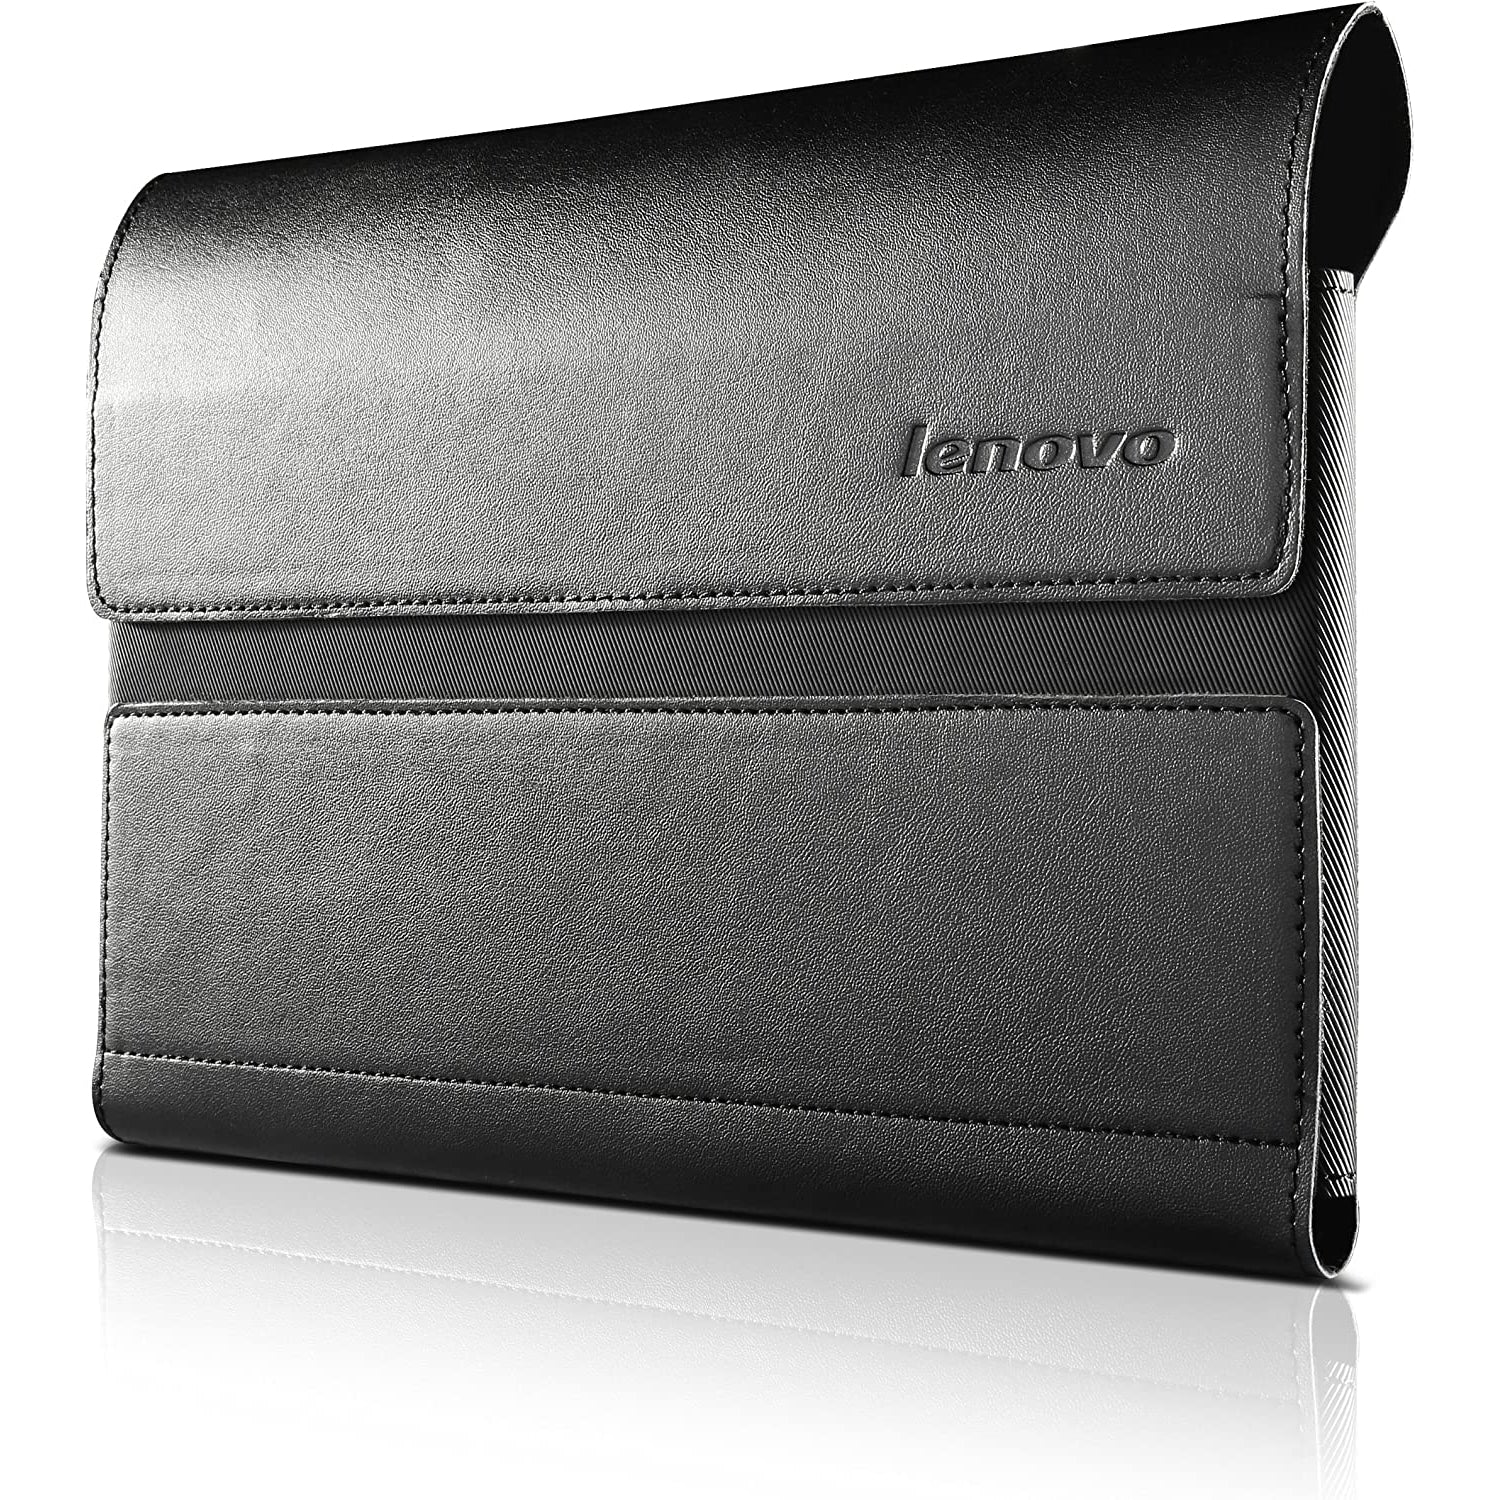 Lenovo Sleeve and Film for 8 inch Yoga Tablet - Black - Refurbished Pristine